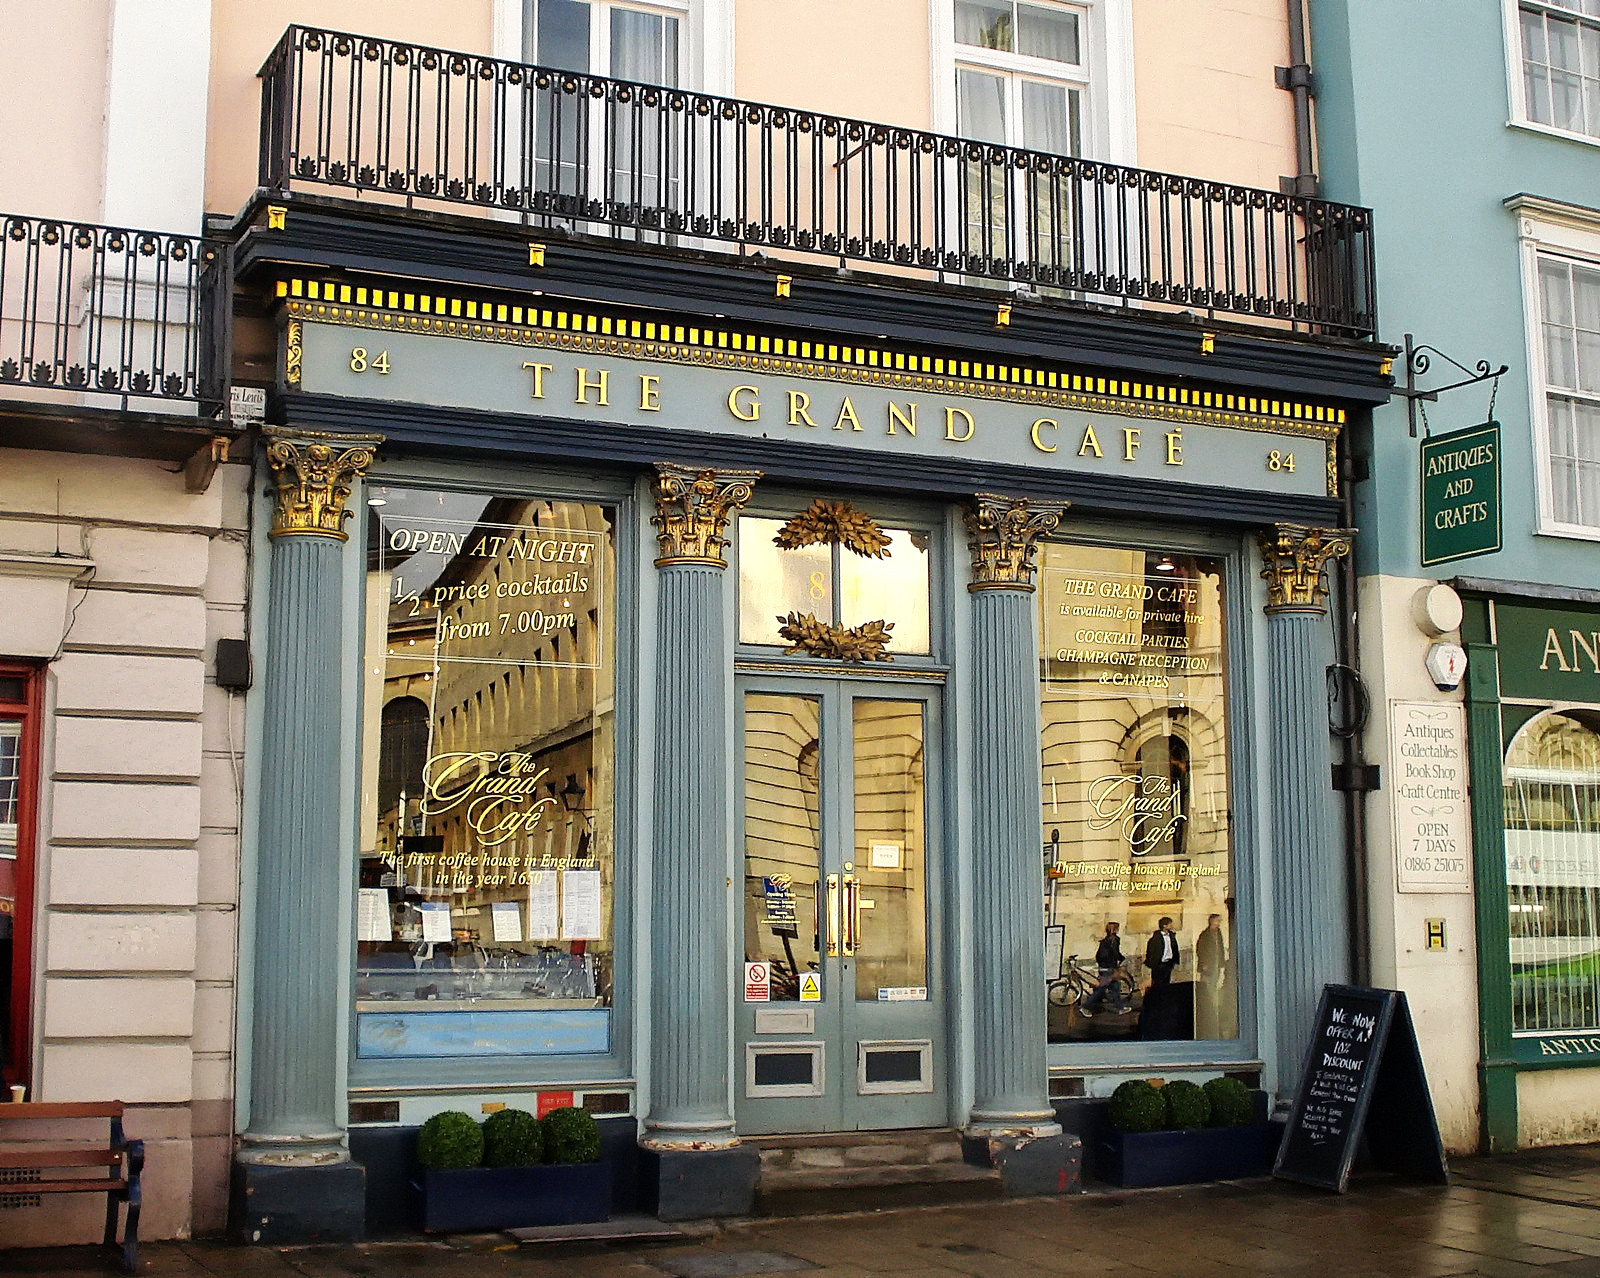 Grand Café, Oxford. Credit Kake, flickr